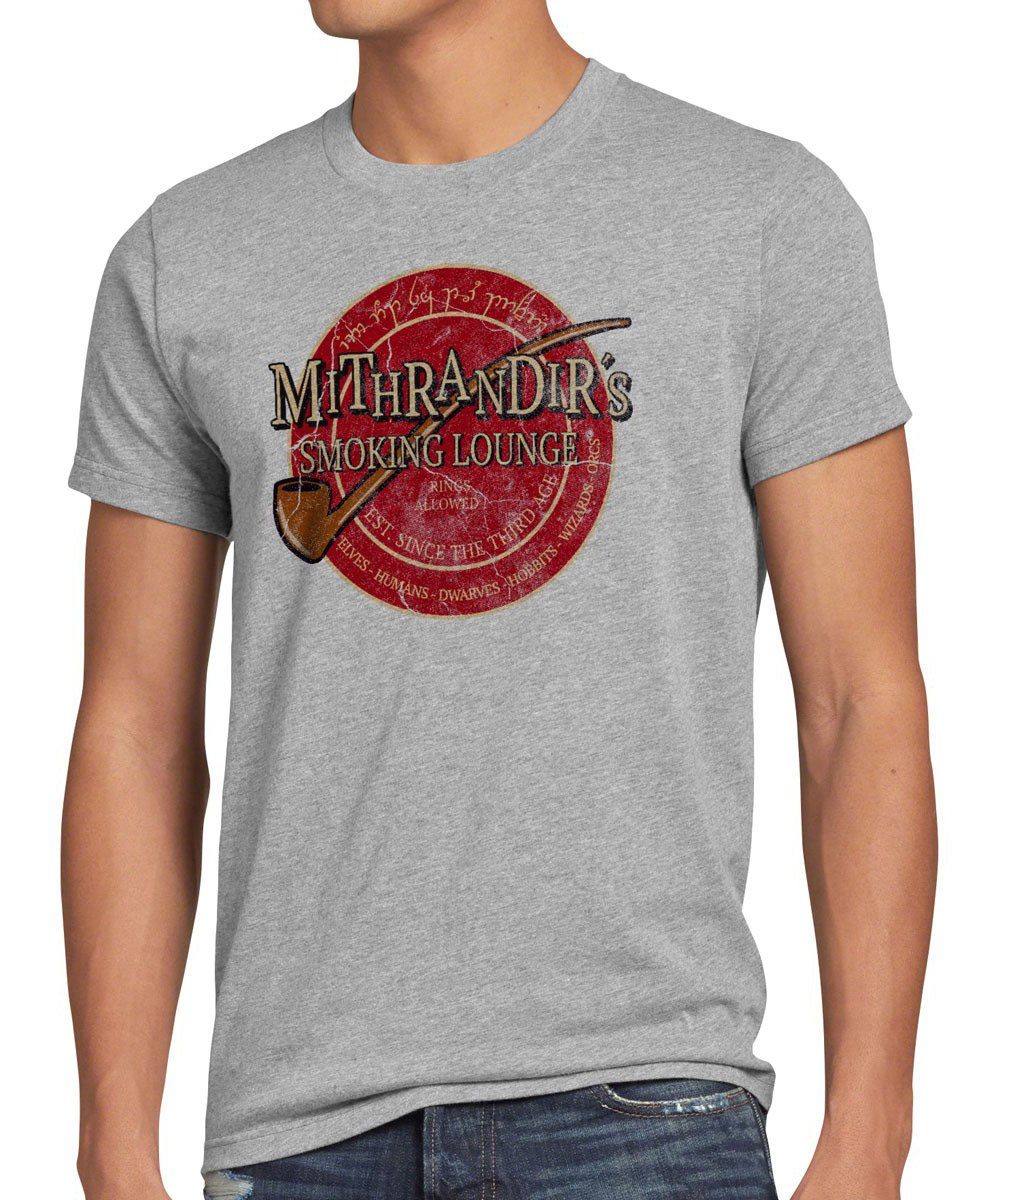 style3 T-Shirt Mithrandir Herr der Auenland mordor grau hobbit Ringe meliert Print-Shirt Smoking Herren gandalf